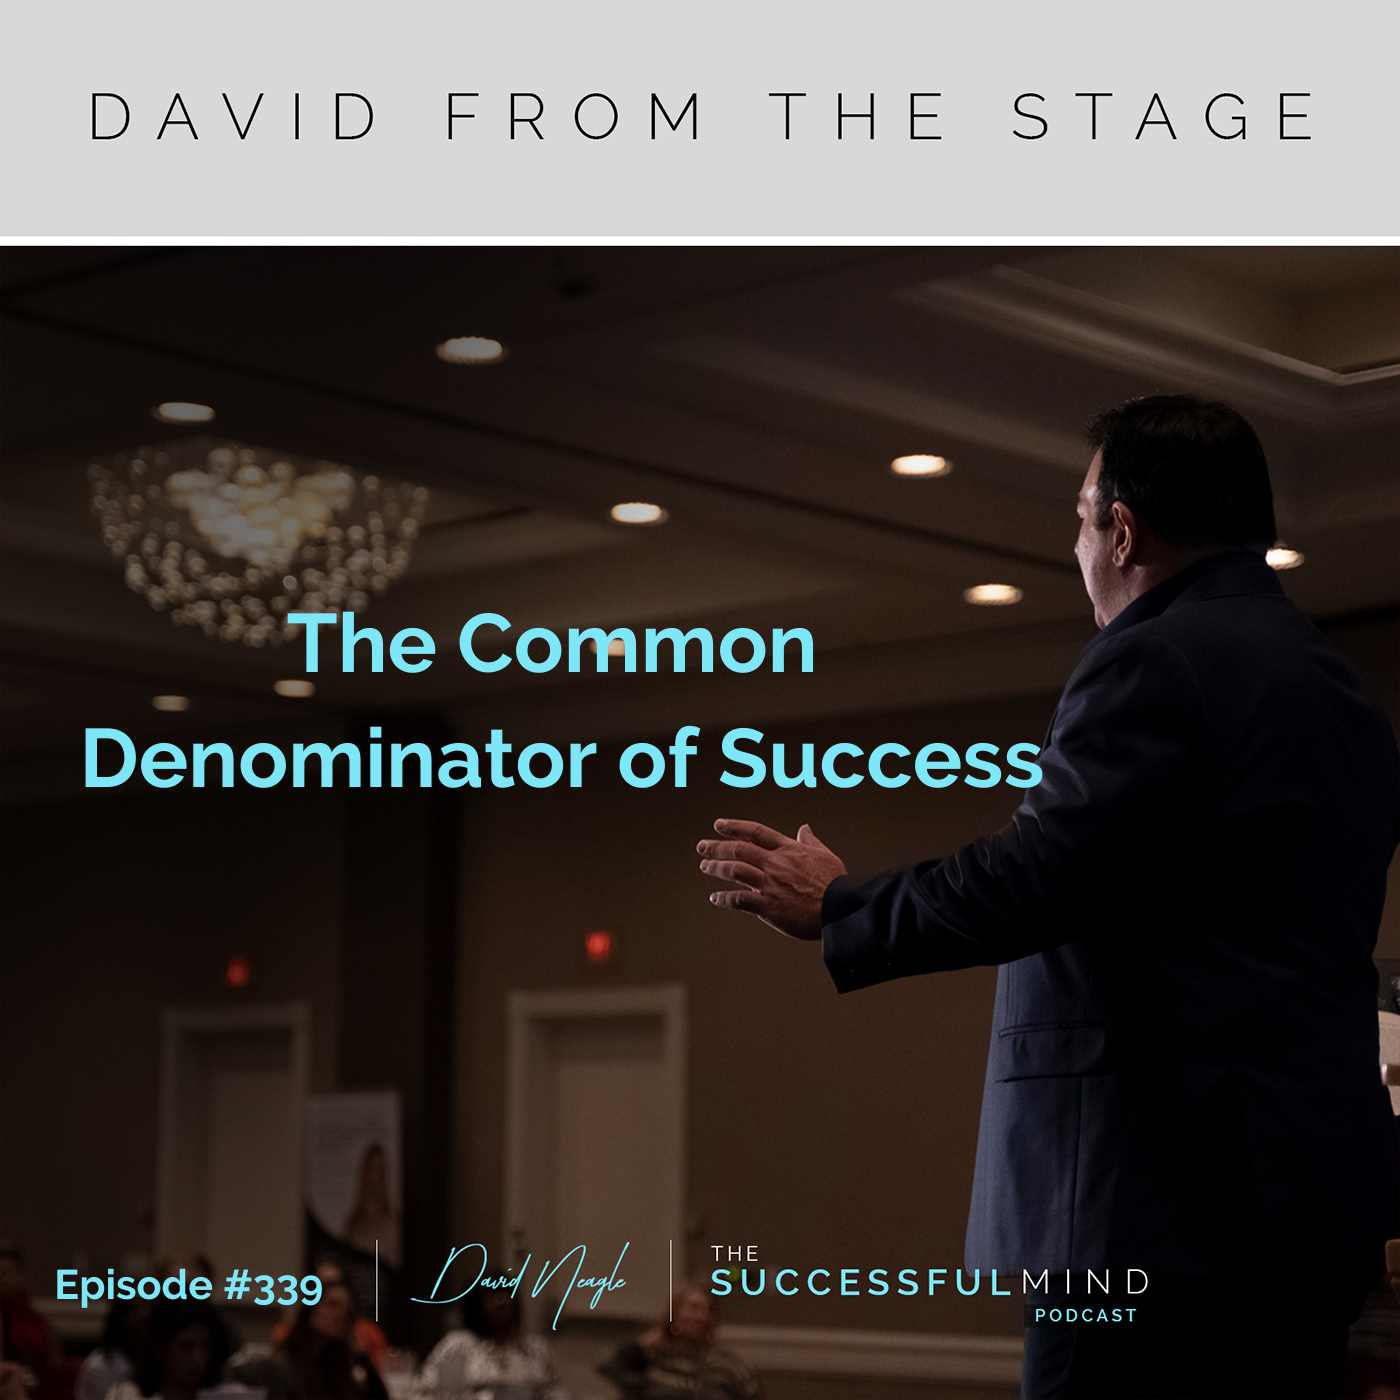 The Successful Mind Podcast - Episode 339 - The Common Denominator of Success